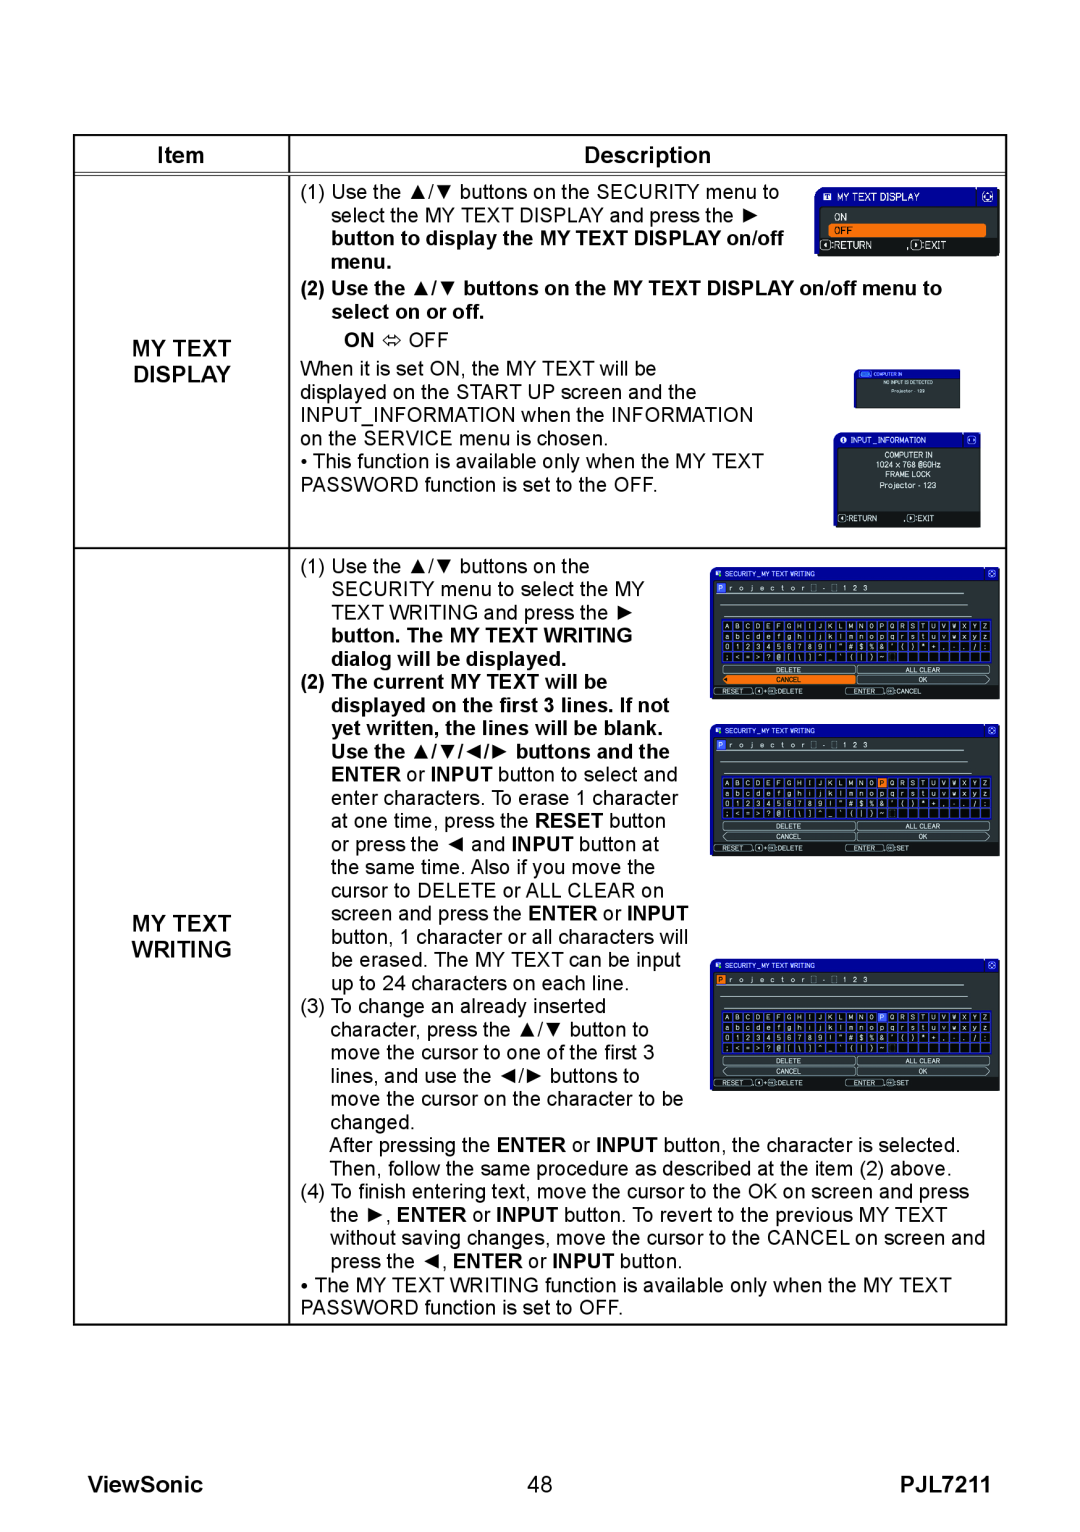 ViewSonic PJL7211 manual Item, Description, My Text, Display, Writing, ViewSonic 